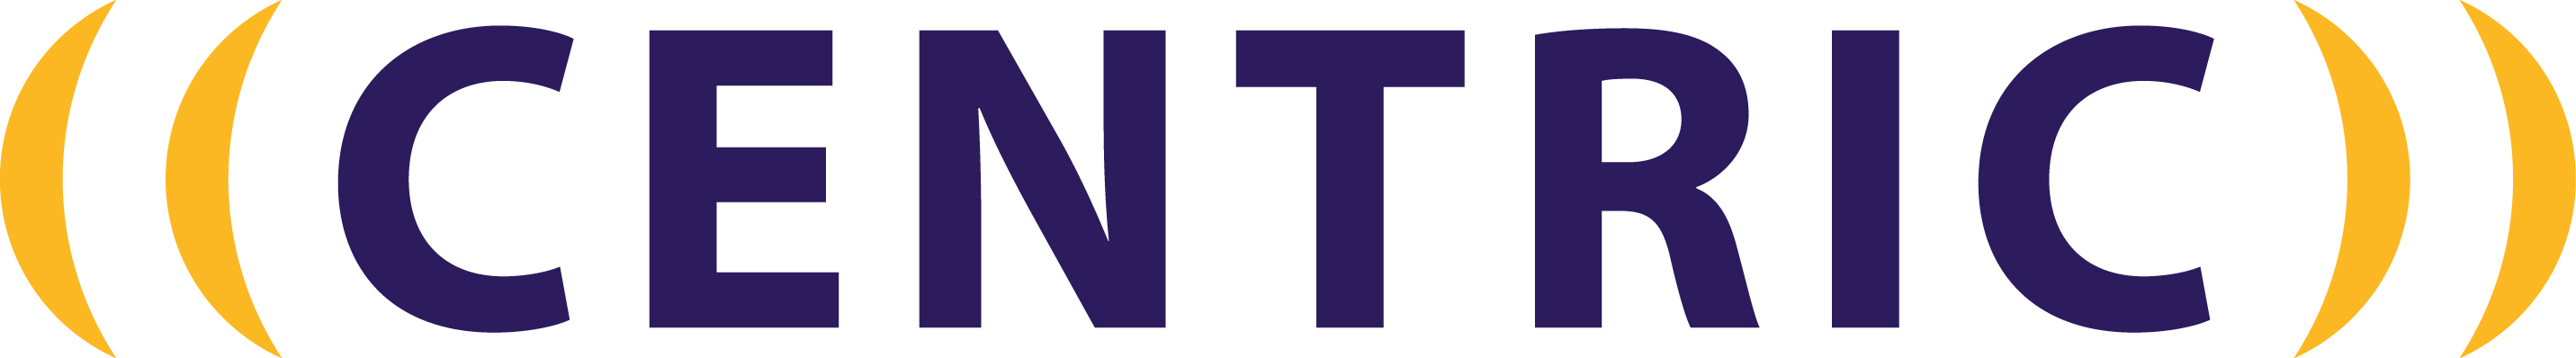 Centric Consulting Company Logo